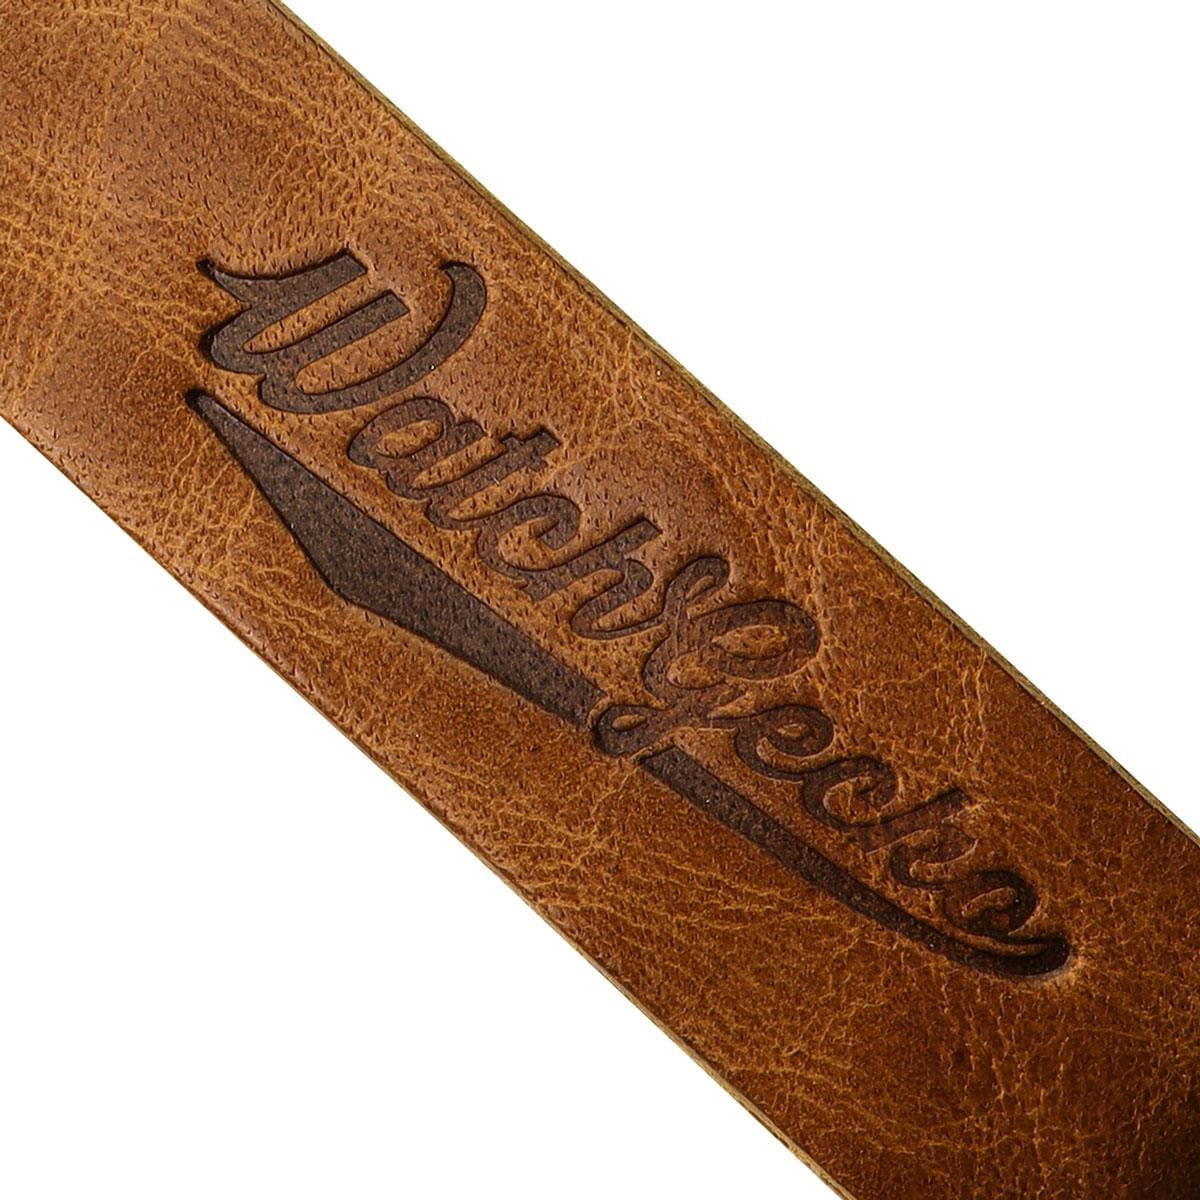 WatchGecko Branded Leather Keyring - Light Brown